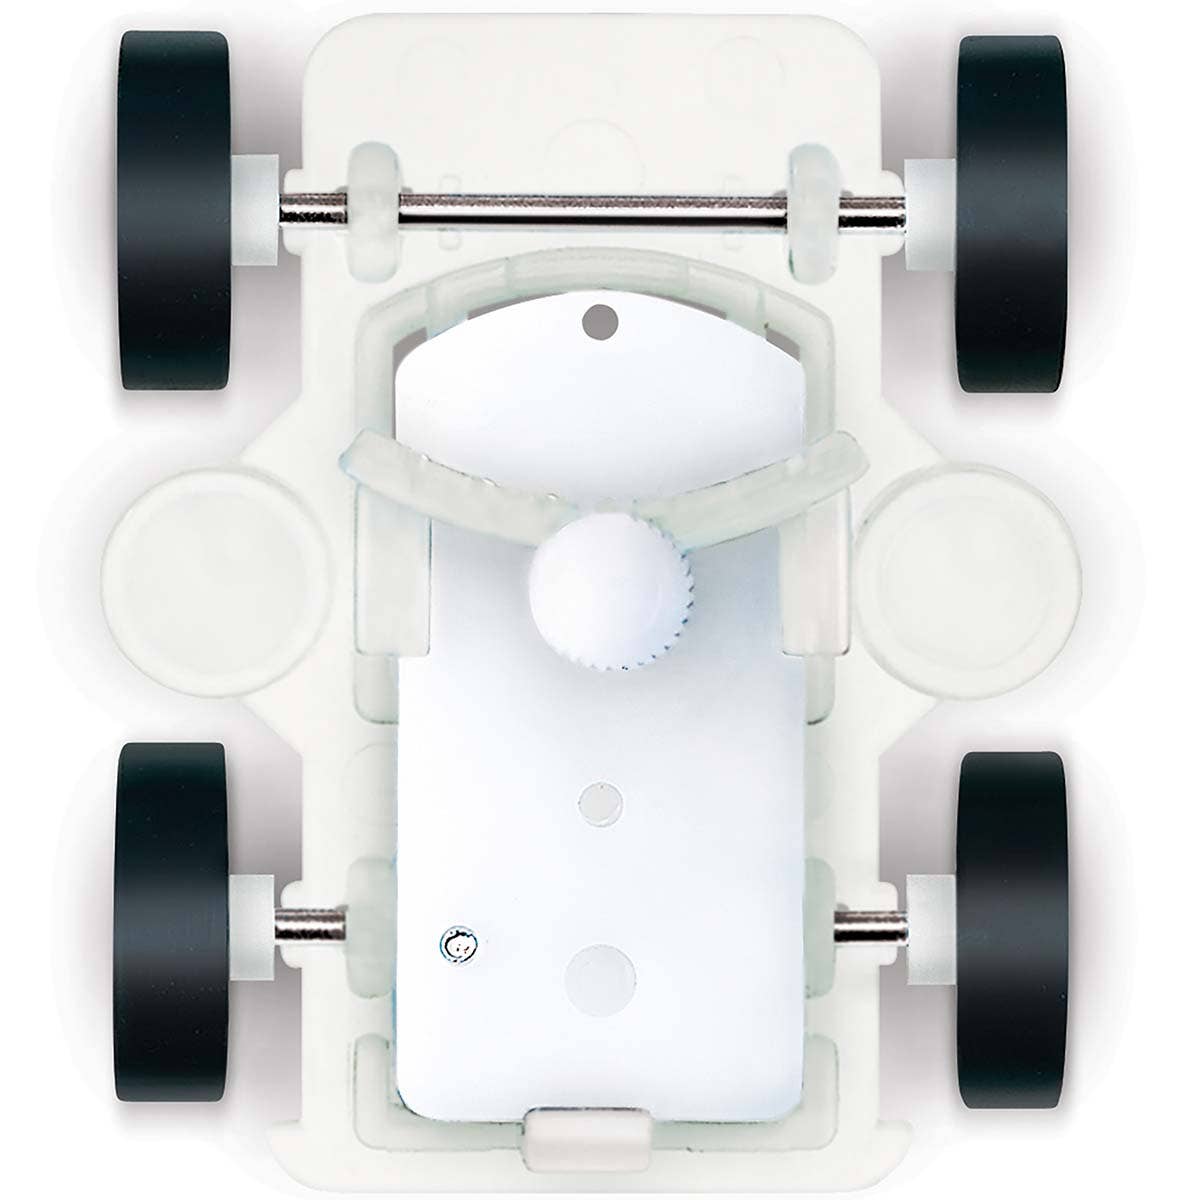 4M Kidzlabs Zero Gravity Fridge Rover STEM Kit